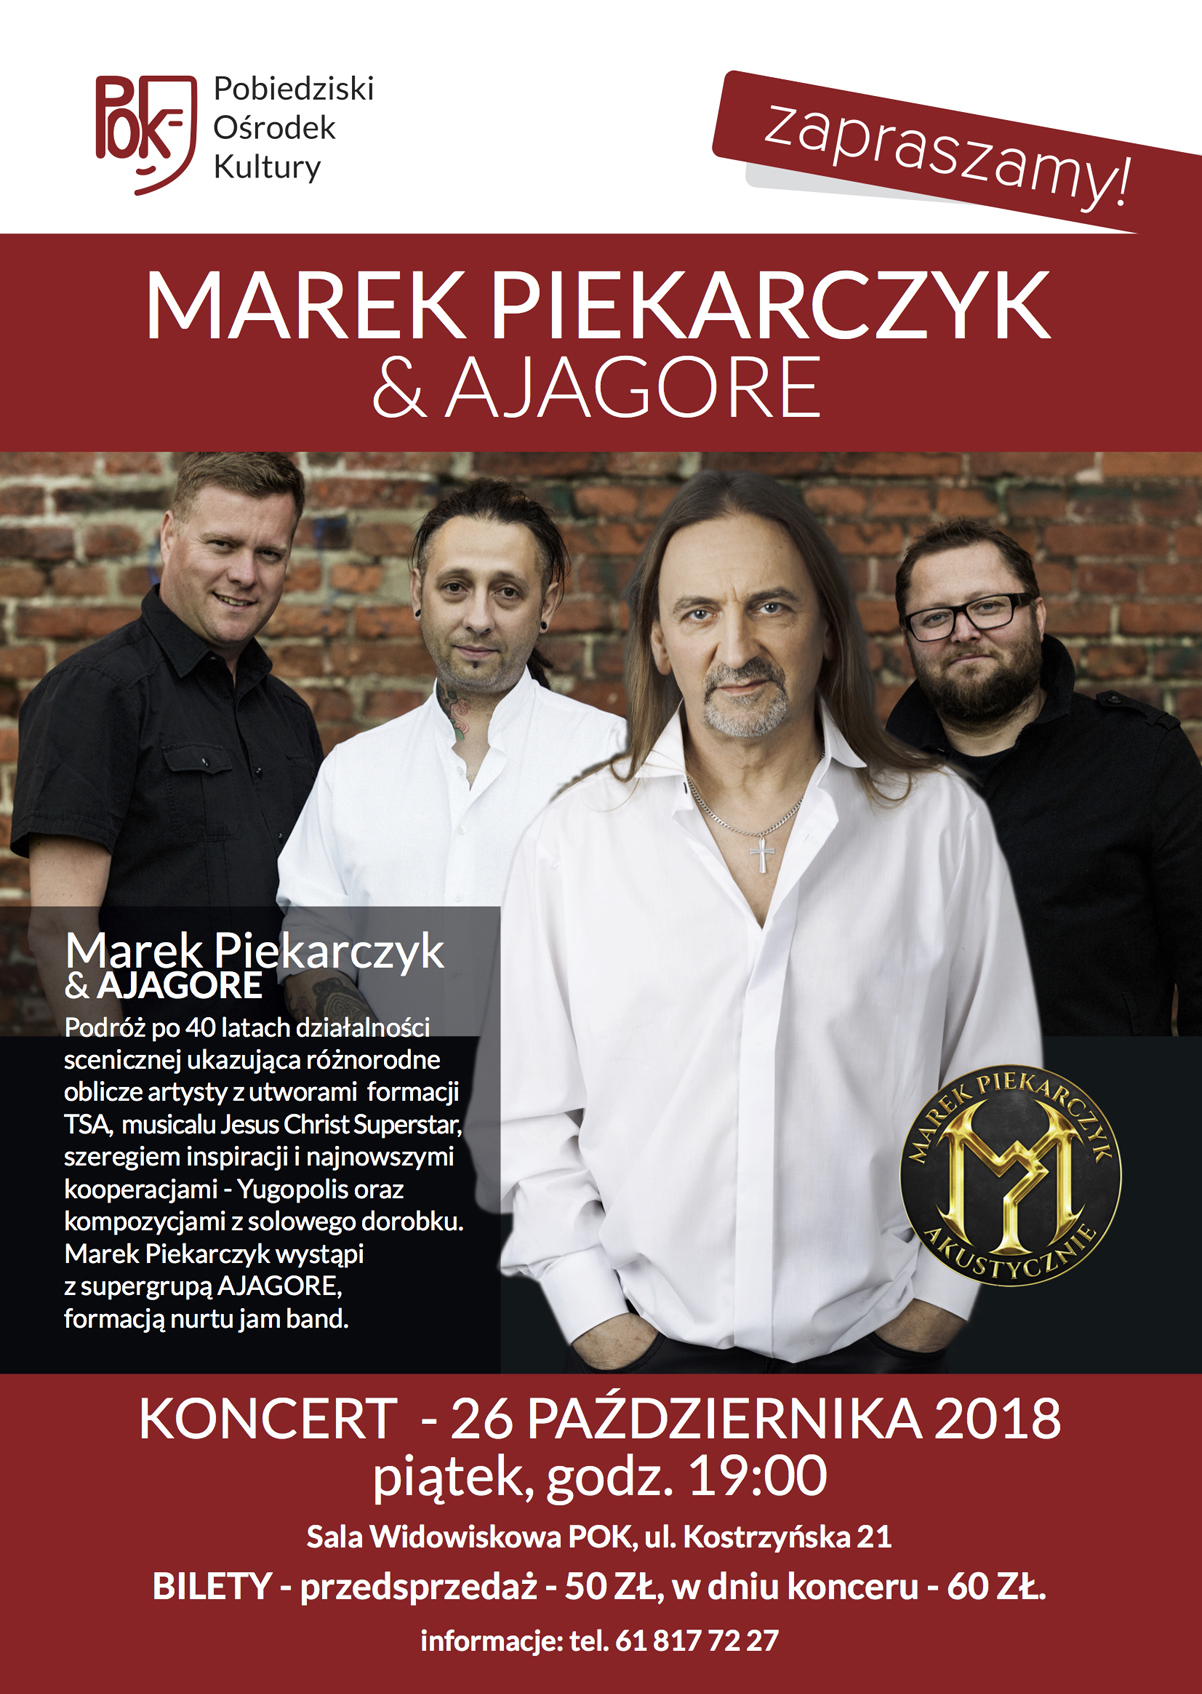 Marek Piekarczyk & Ajagore